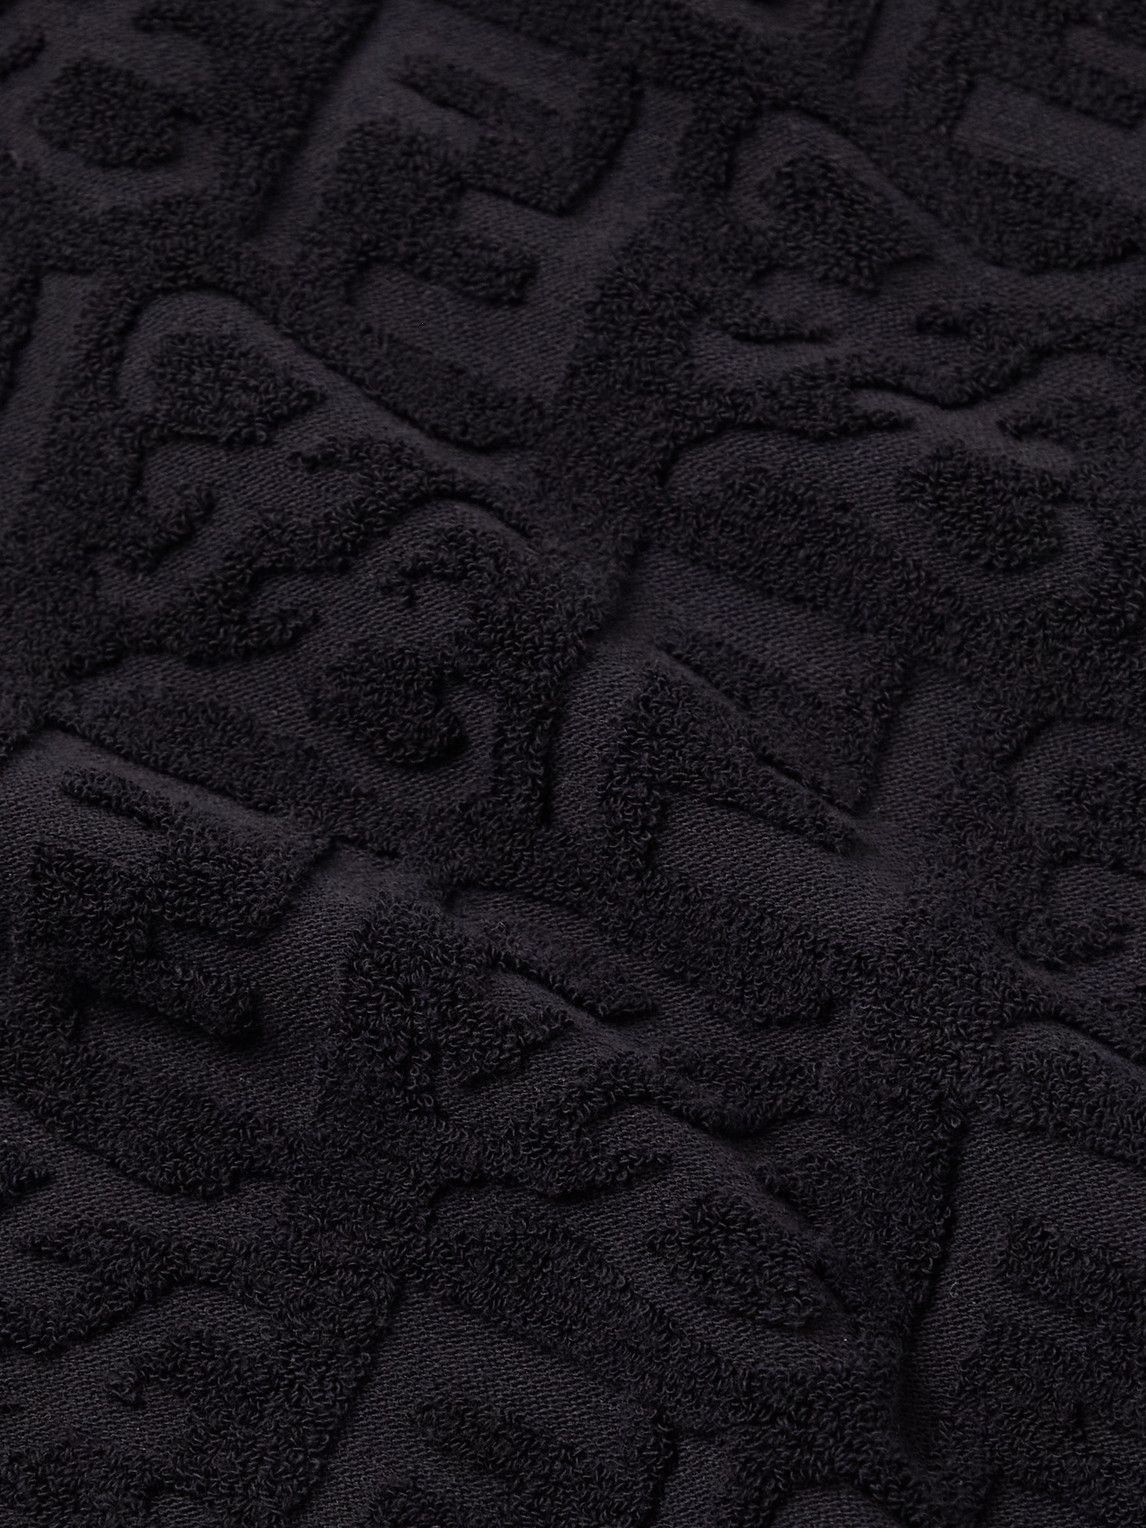 Fendi Brand Drip Black SVG